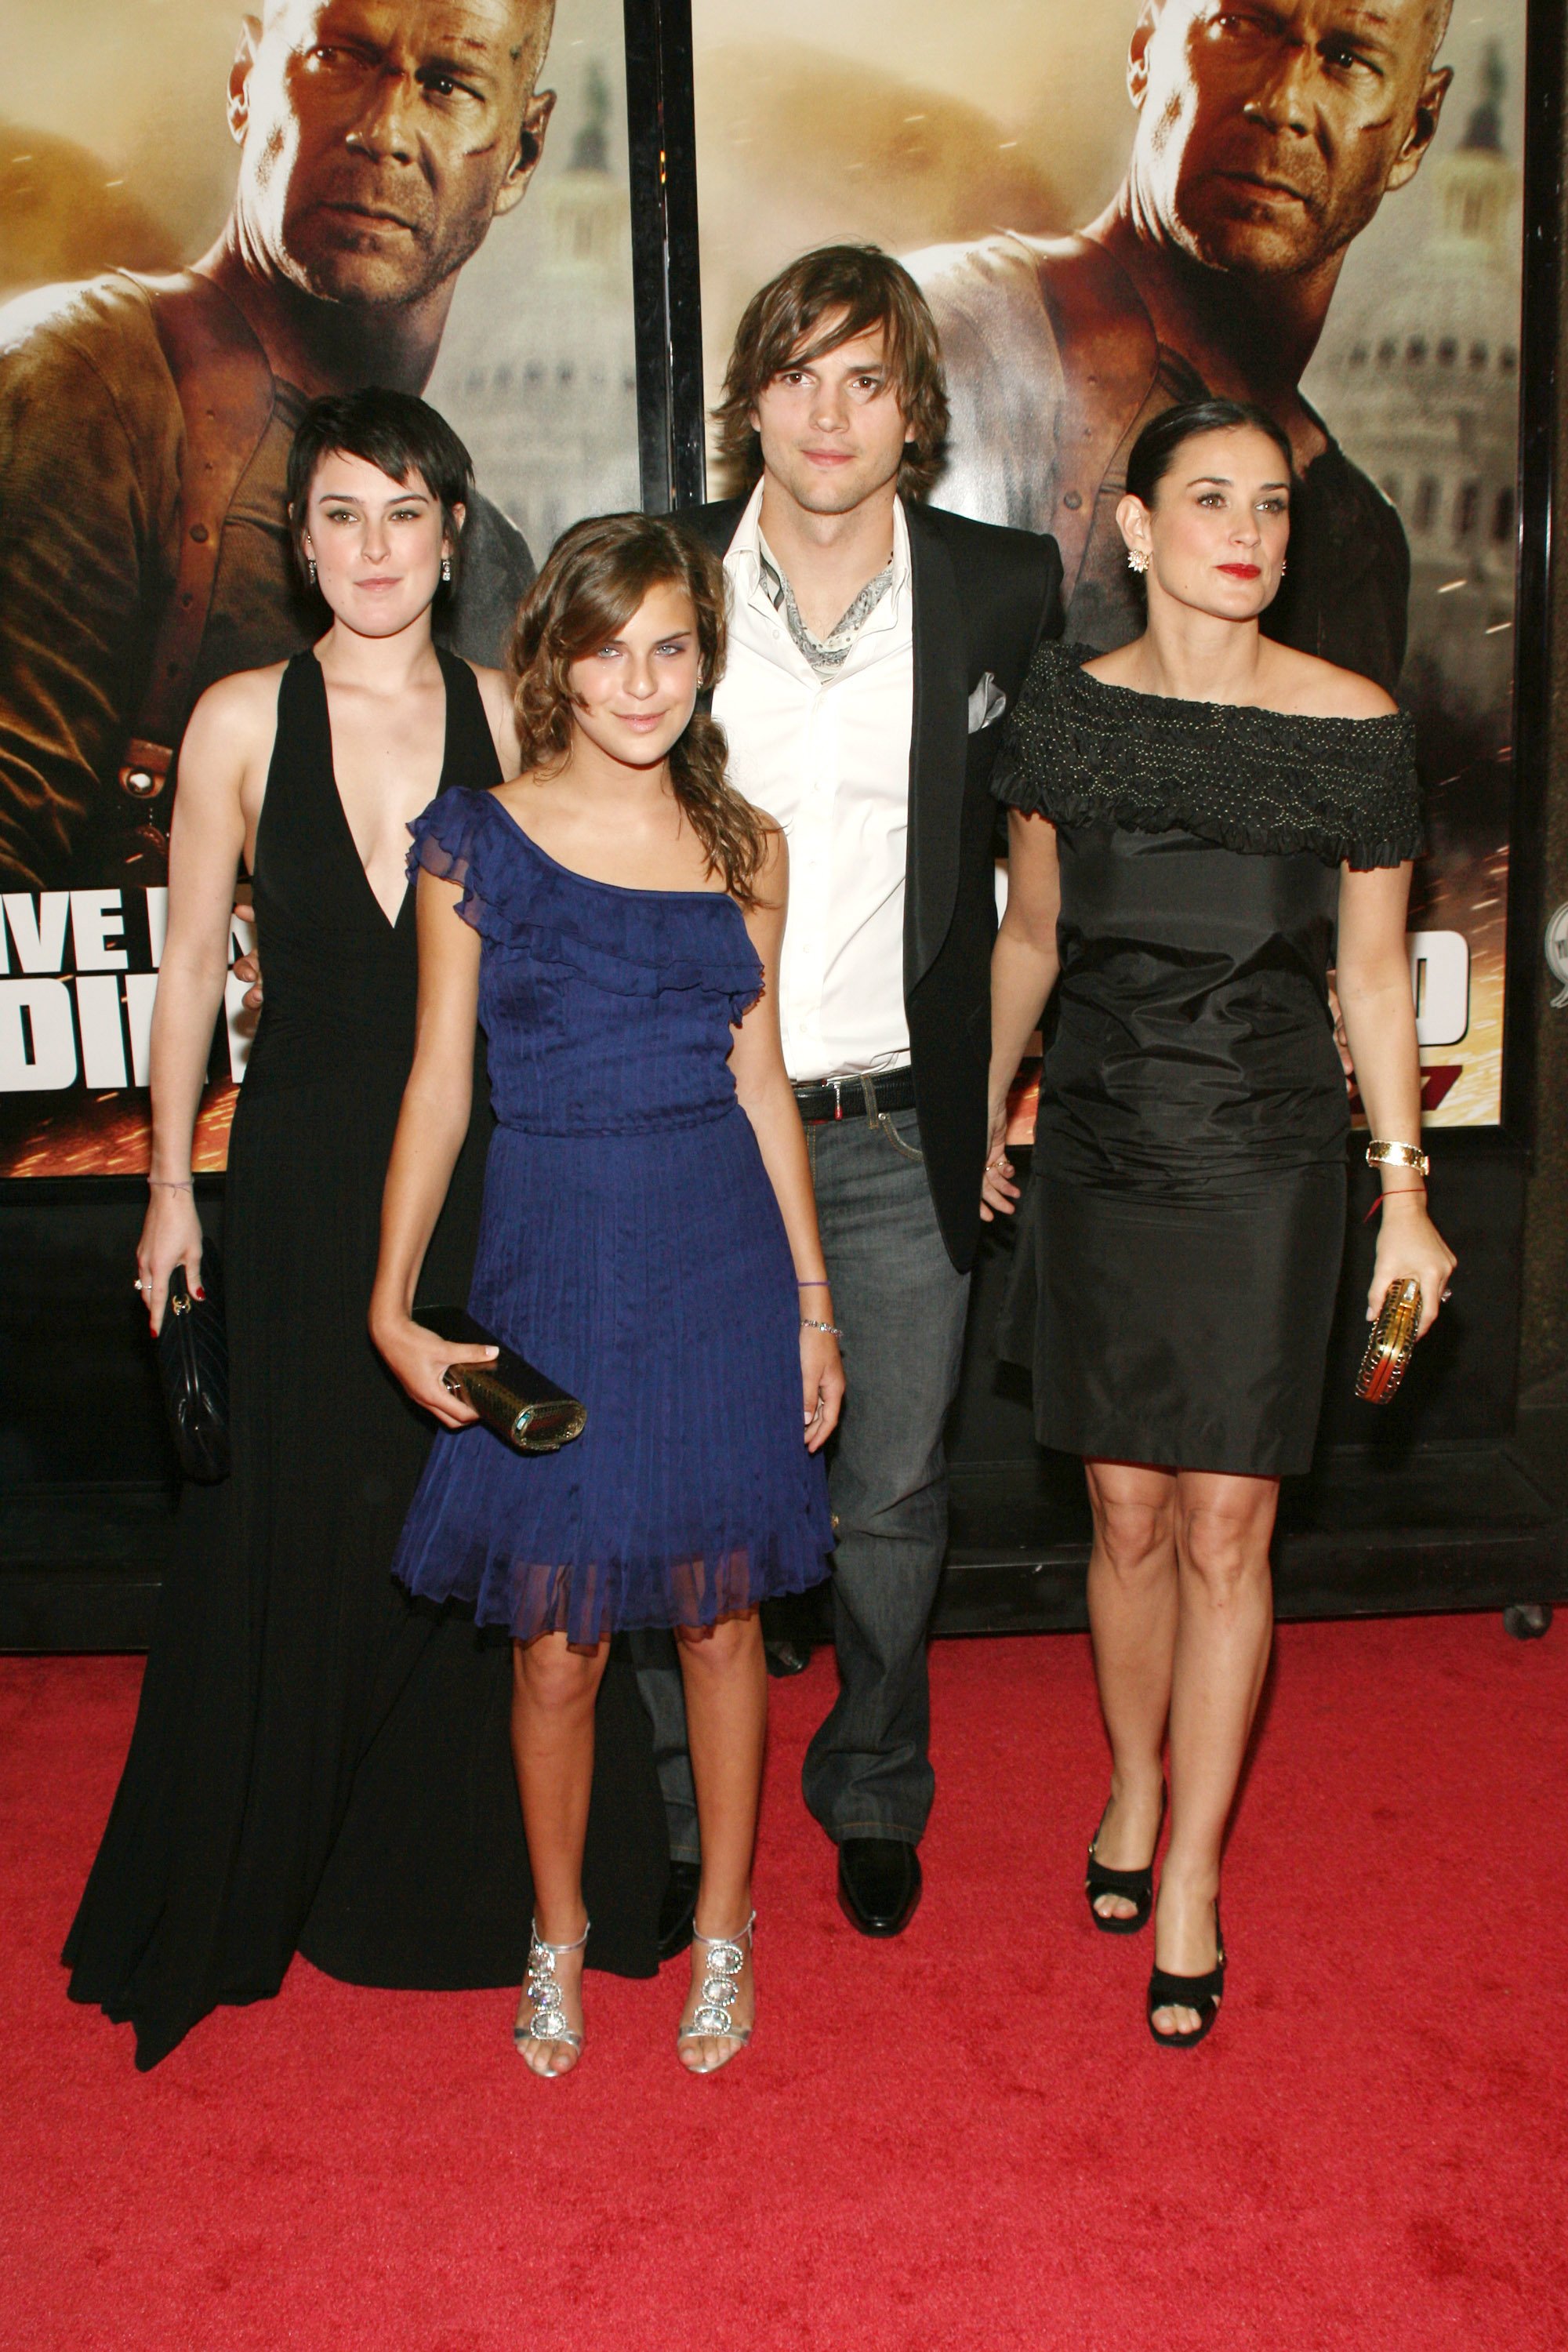 Rumer Willis, Tallulah Willis, Ashton Kutcher y Demi Moore en el estreno de "Live Free or Die Hard" en Nueva York en 2007 | Foto: Getty Images